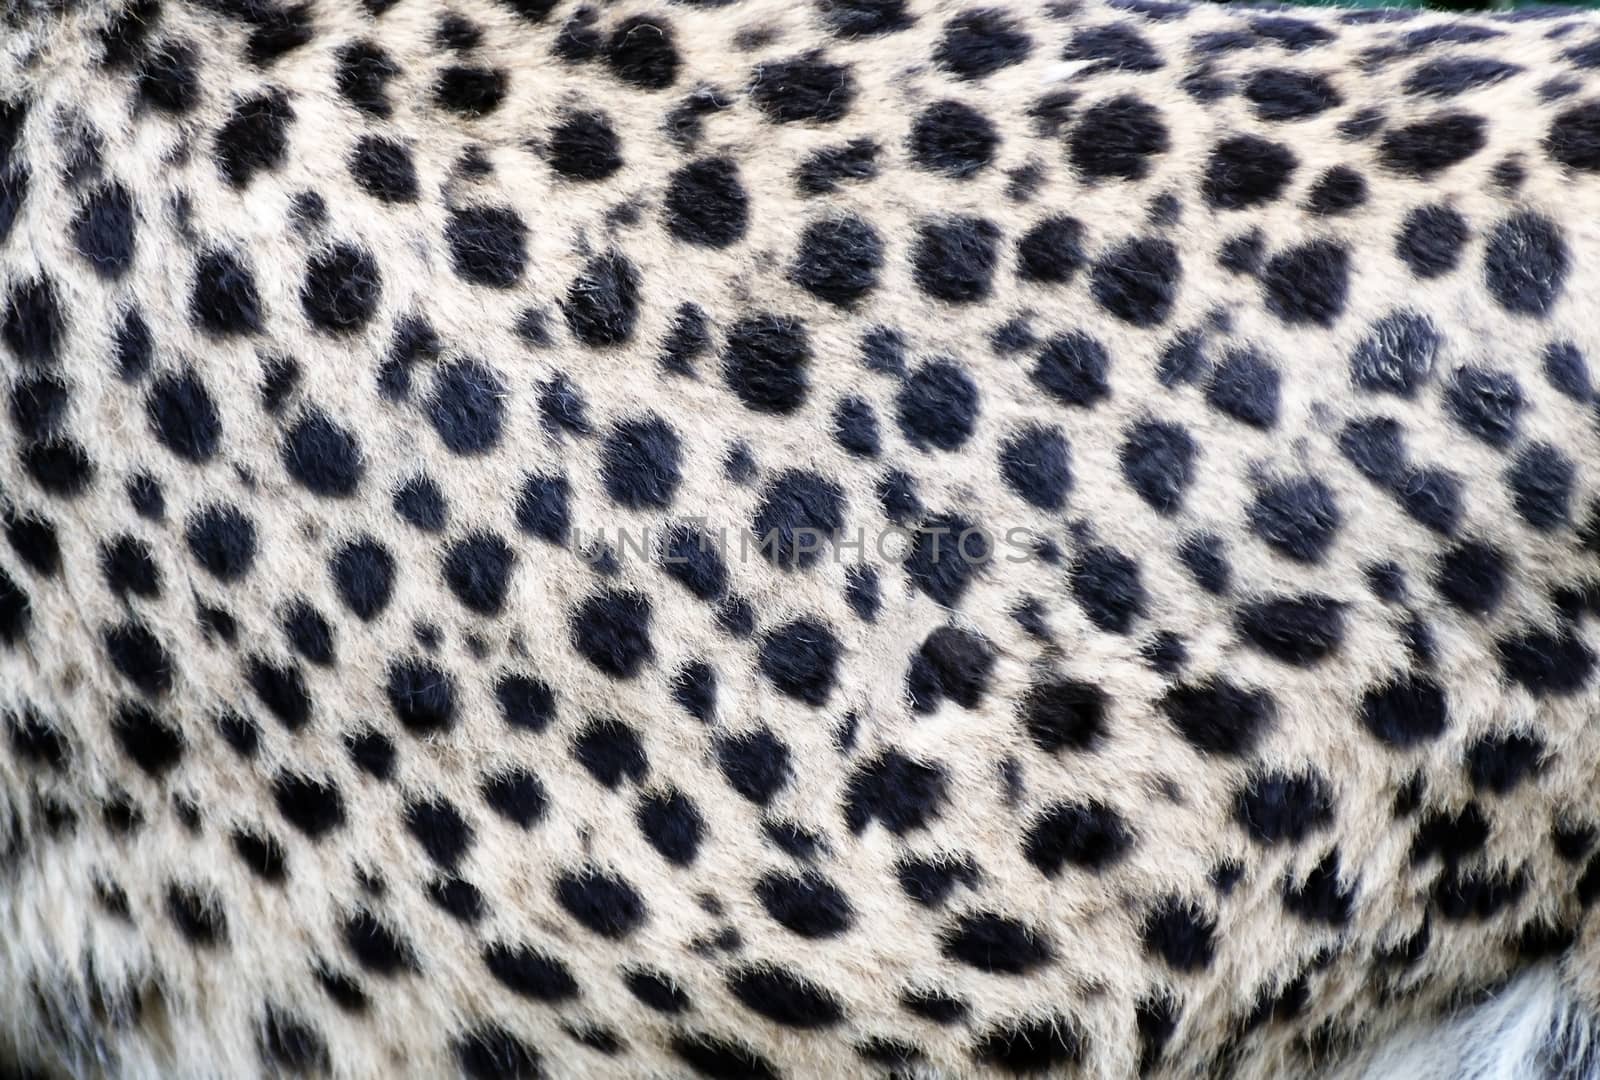 Cheetah fur closeup by kmwphotography